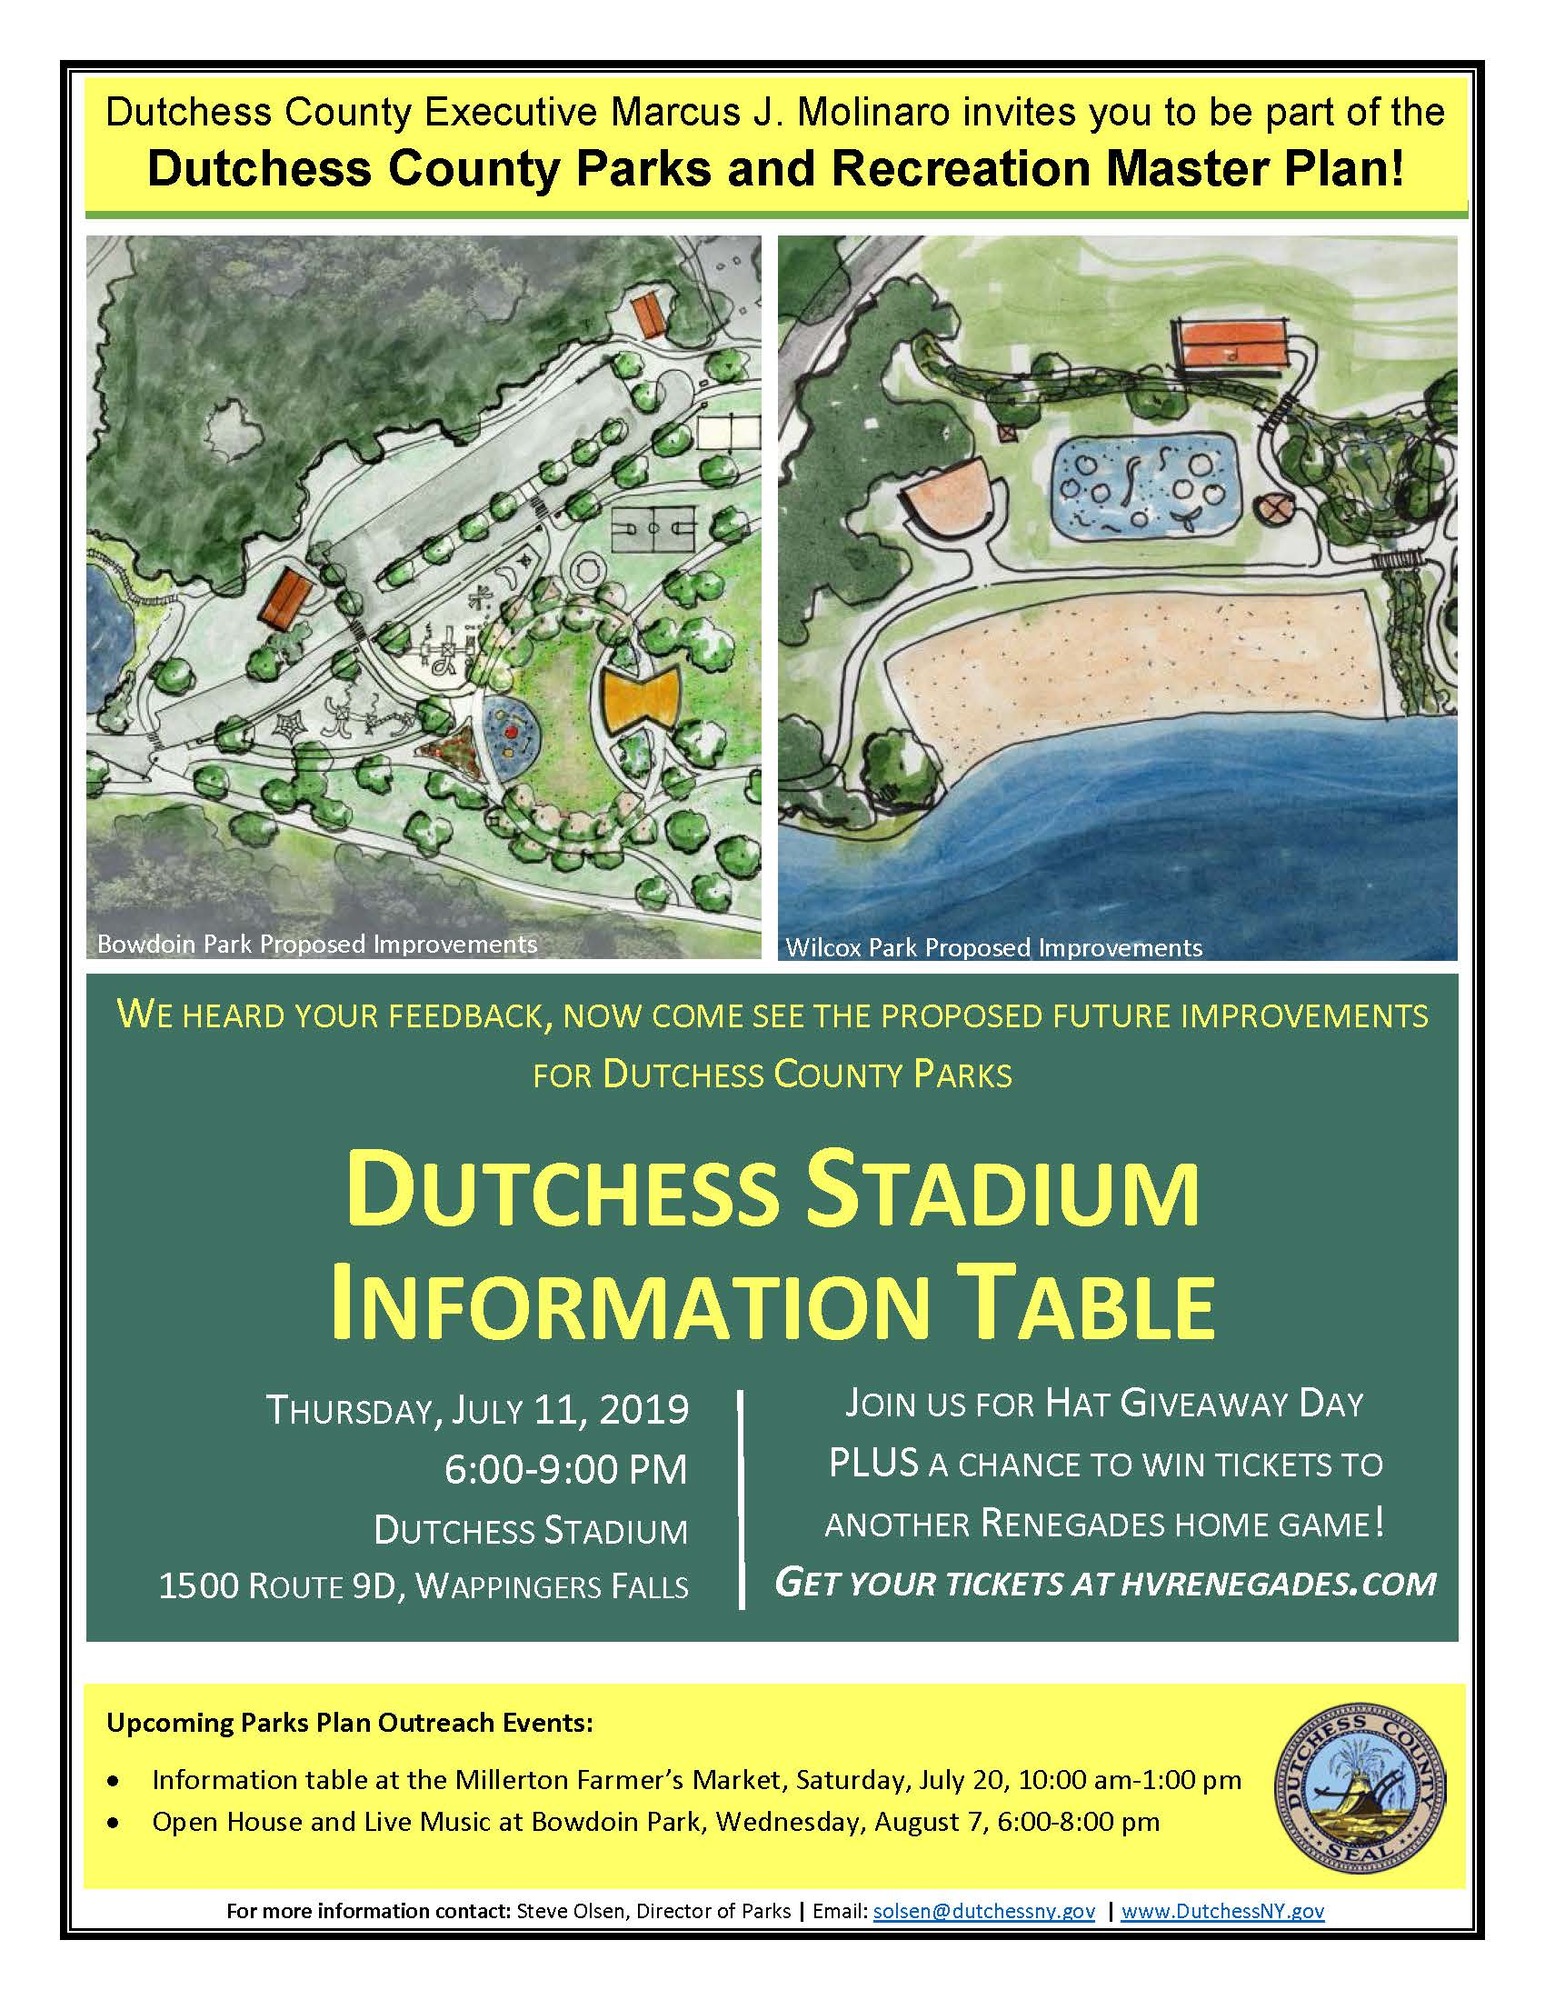 Parks Master Plan Outreach Event at Dutchess Stadium July 11